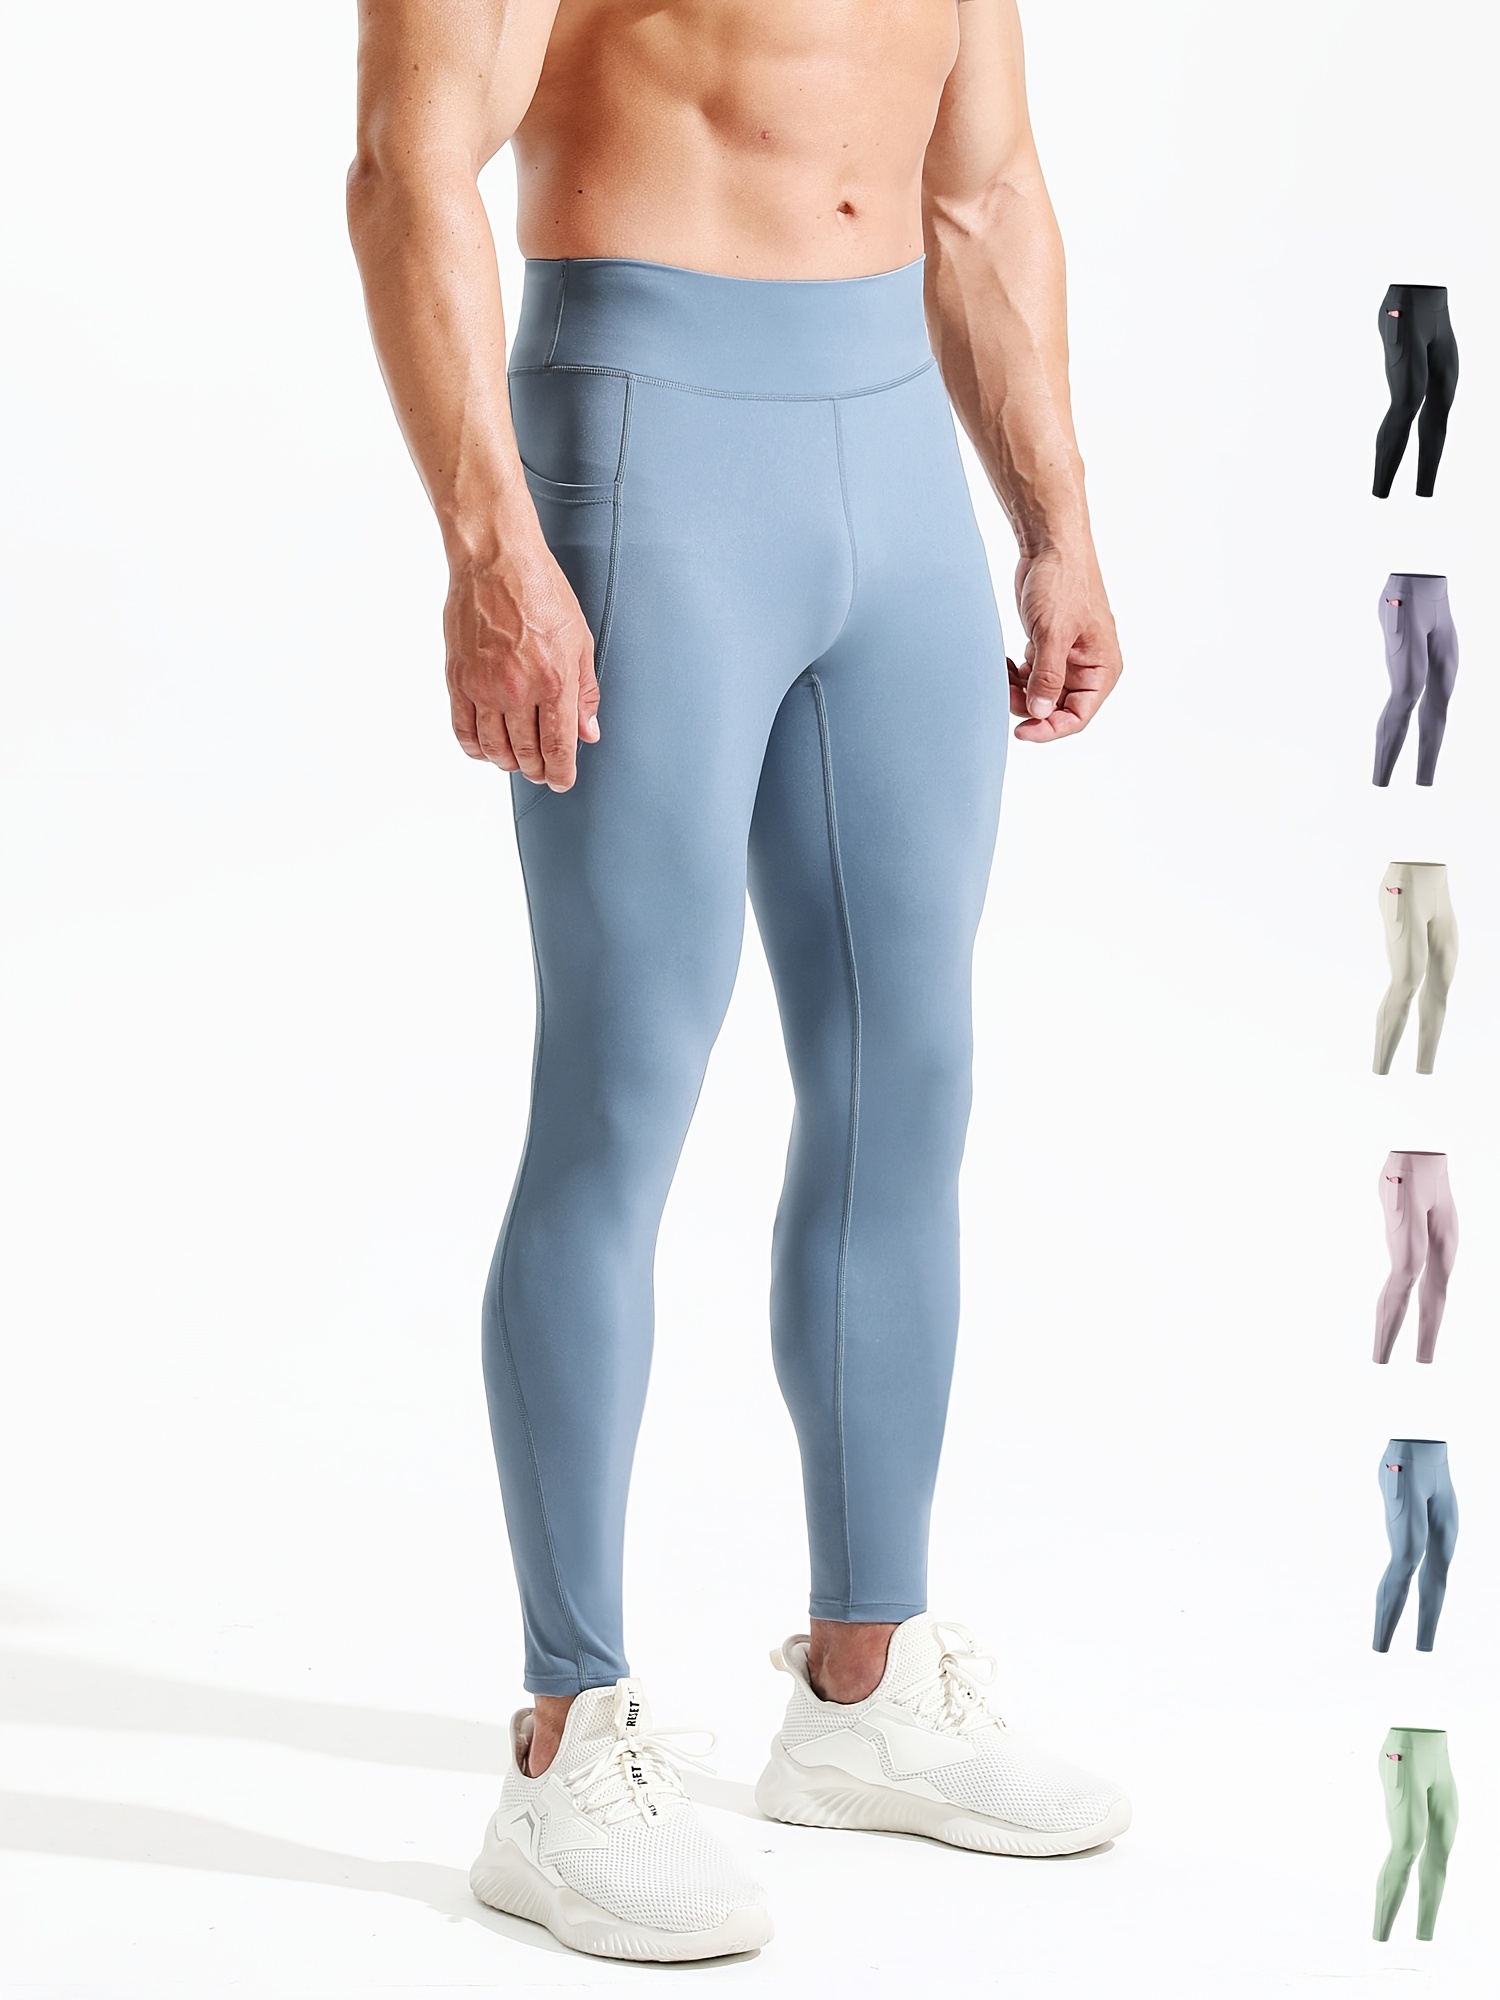 Mens Compression Pants Waist Elastic Running Workout Leggings